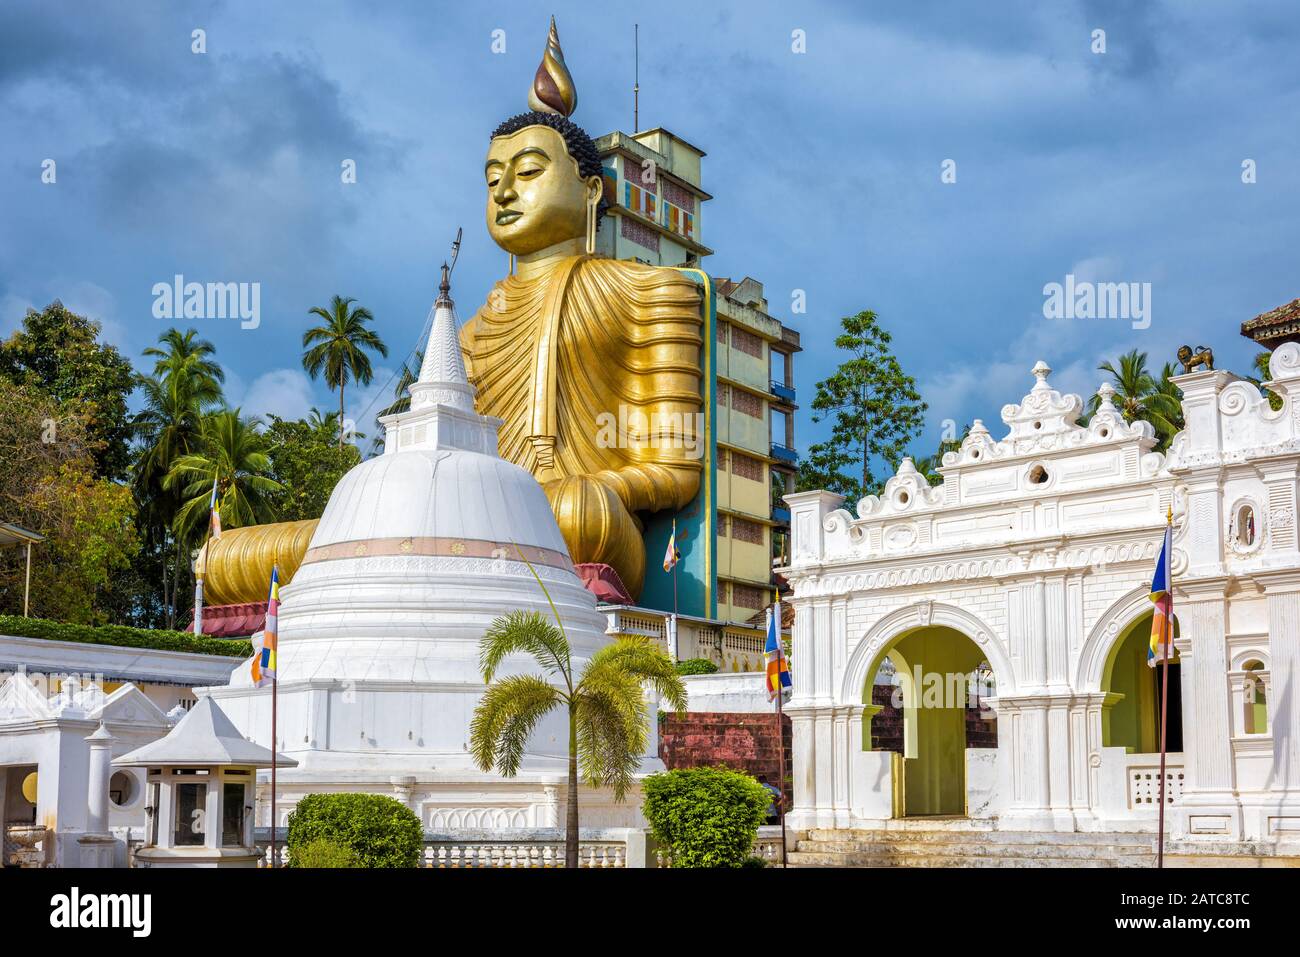 Wewurukannala Buddhist temple in Dickwella, Sri Lanka. A 50m-high seated big Buddha statue is the largest in Sri Lanka. Historical and religious landm Stock Photo